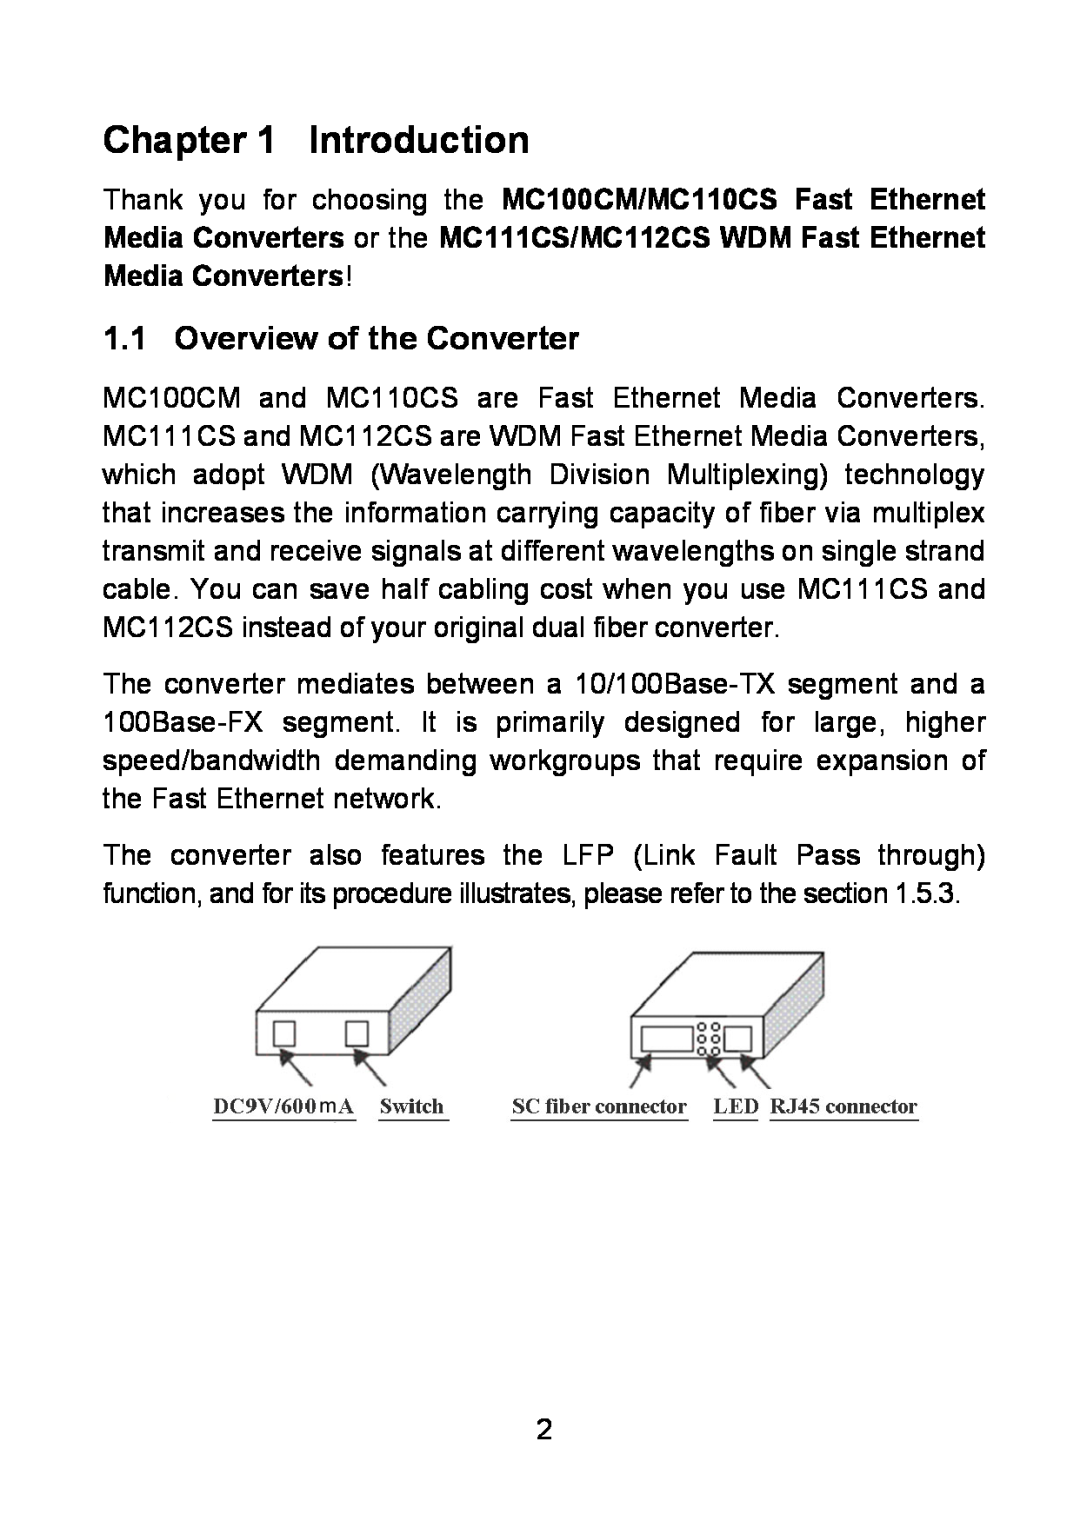 TP-Link MC100CM, MC112CS, MC111CS manual Introduction, Overview of the Converter 